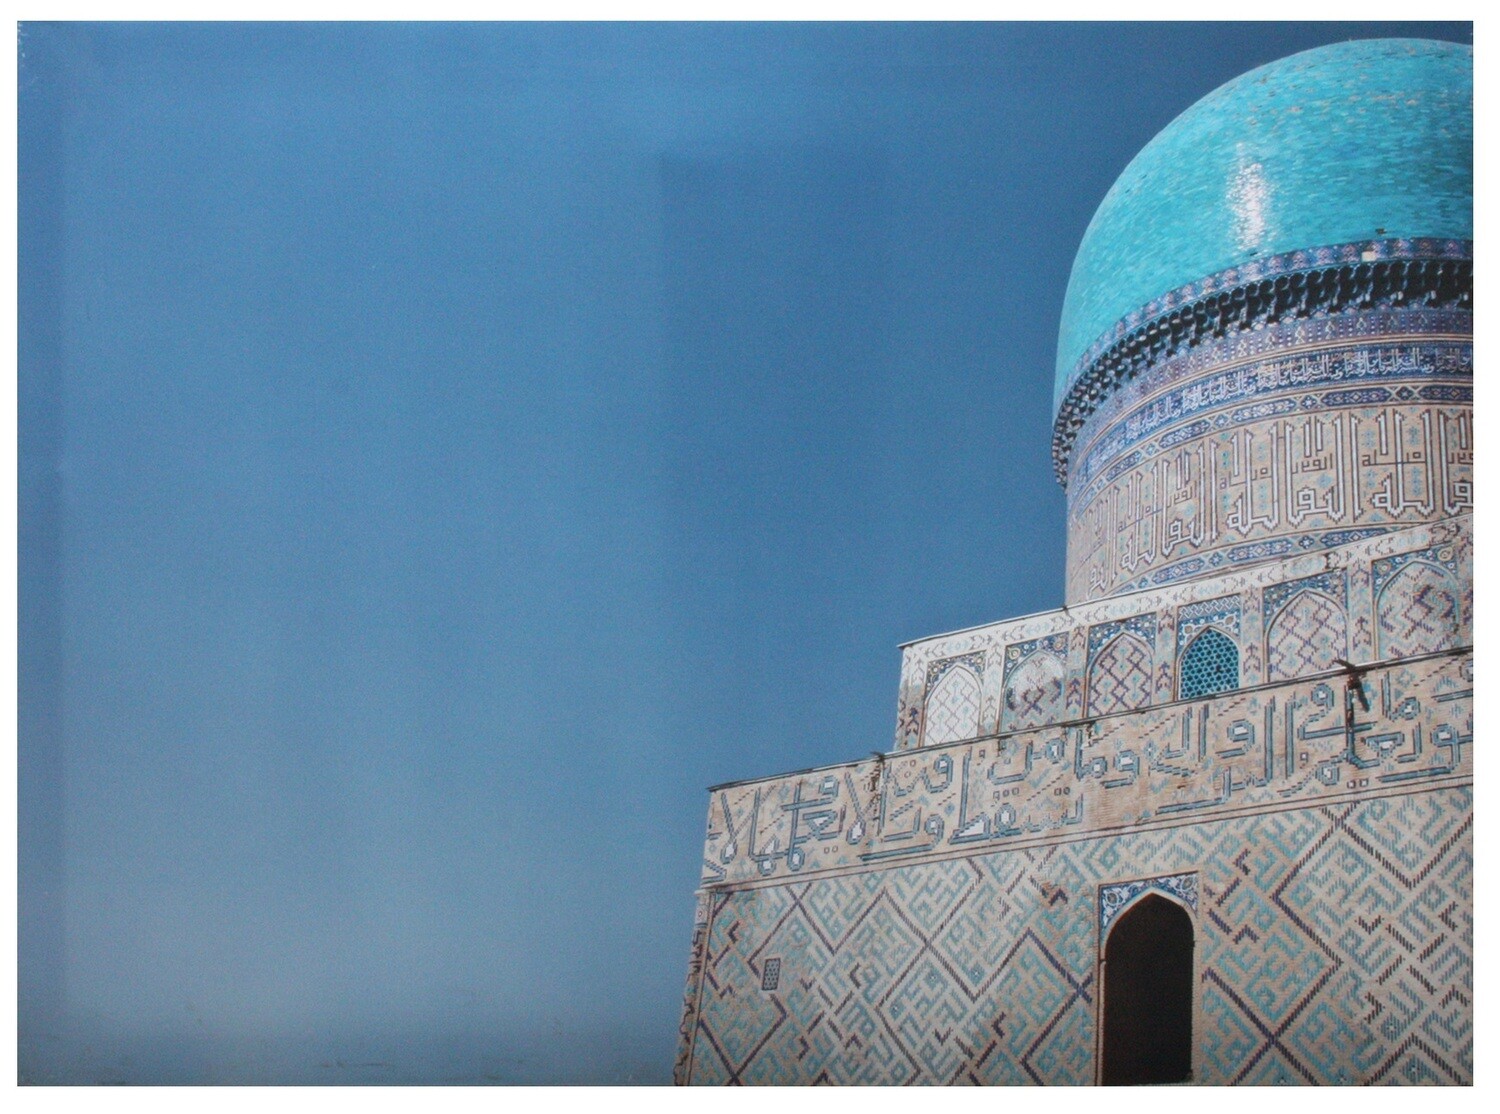 Scenic Turquoise Dome Hexagonal
Samarkand Mosque Original Giclée Canvas